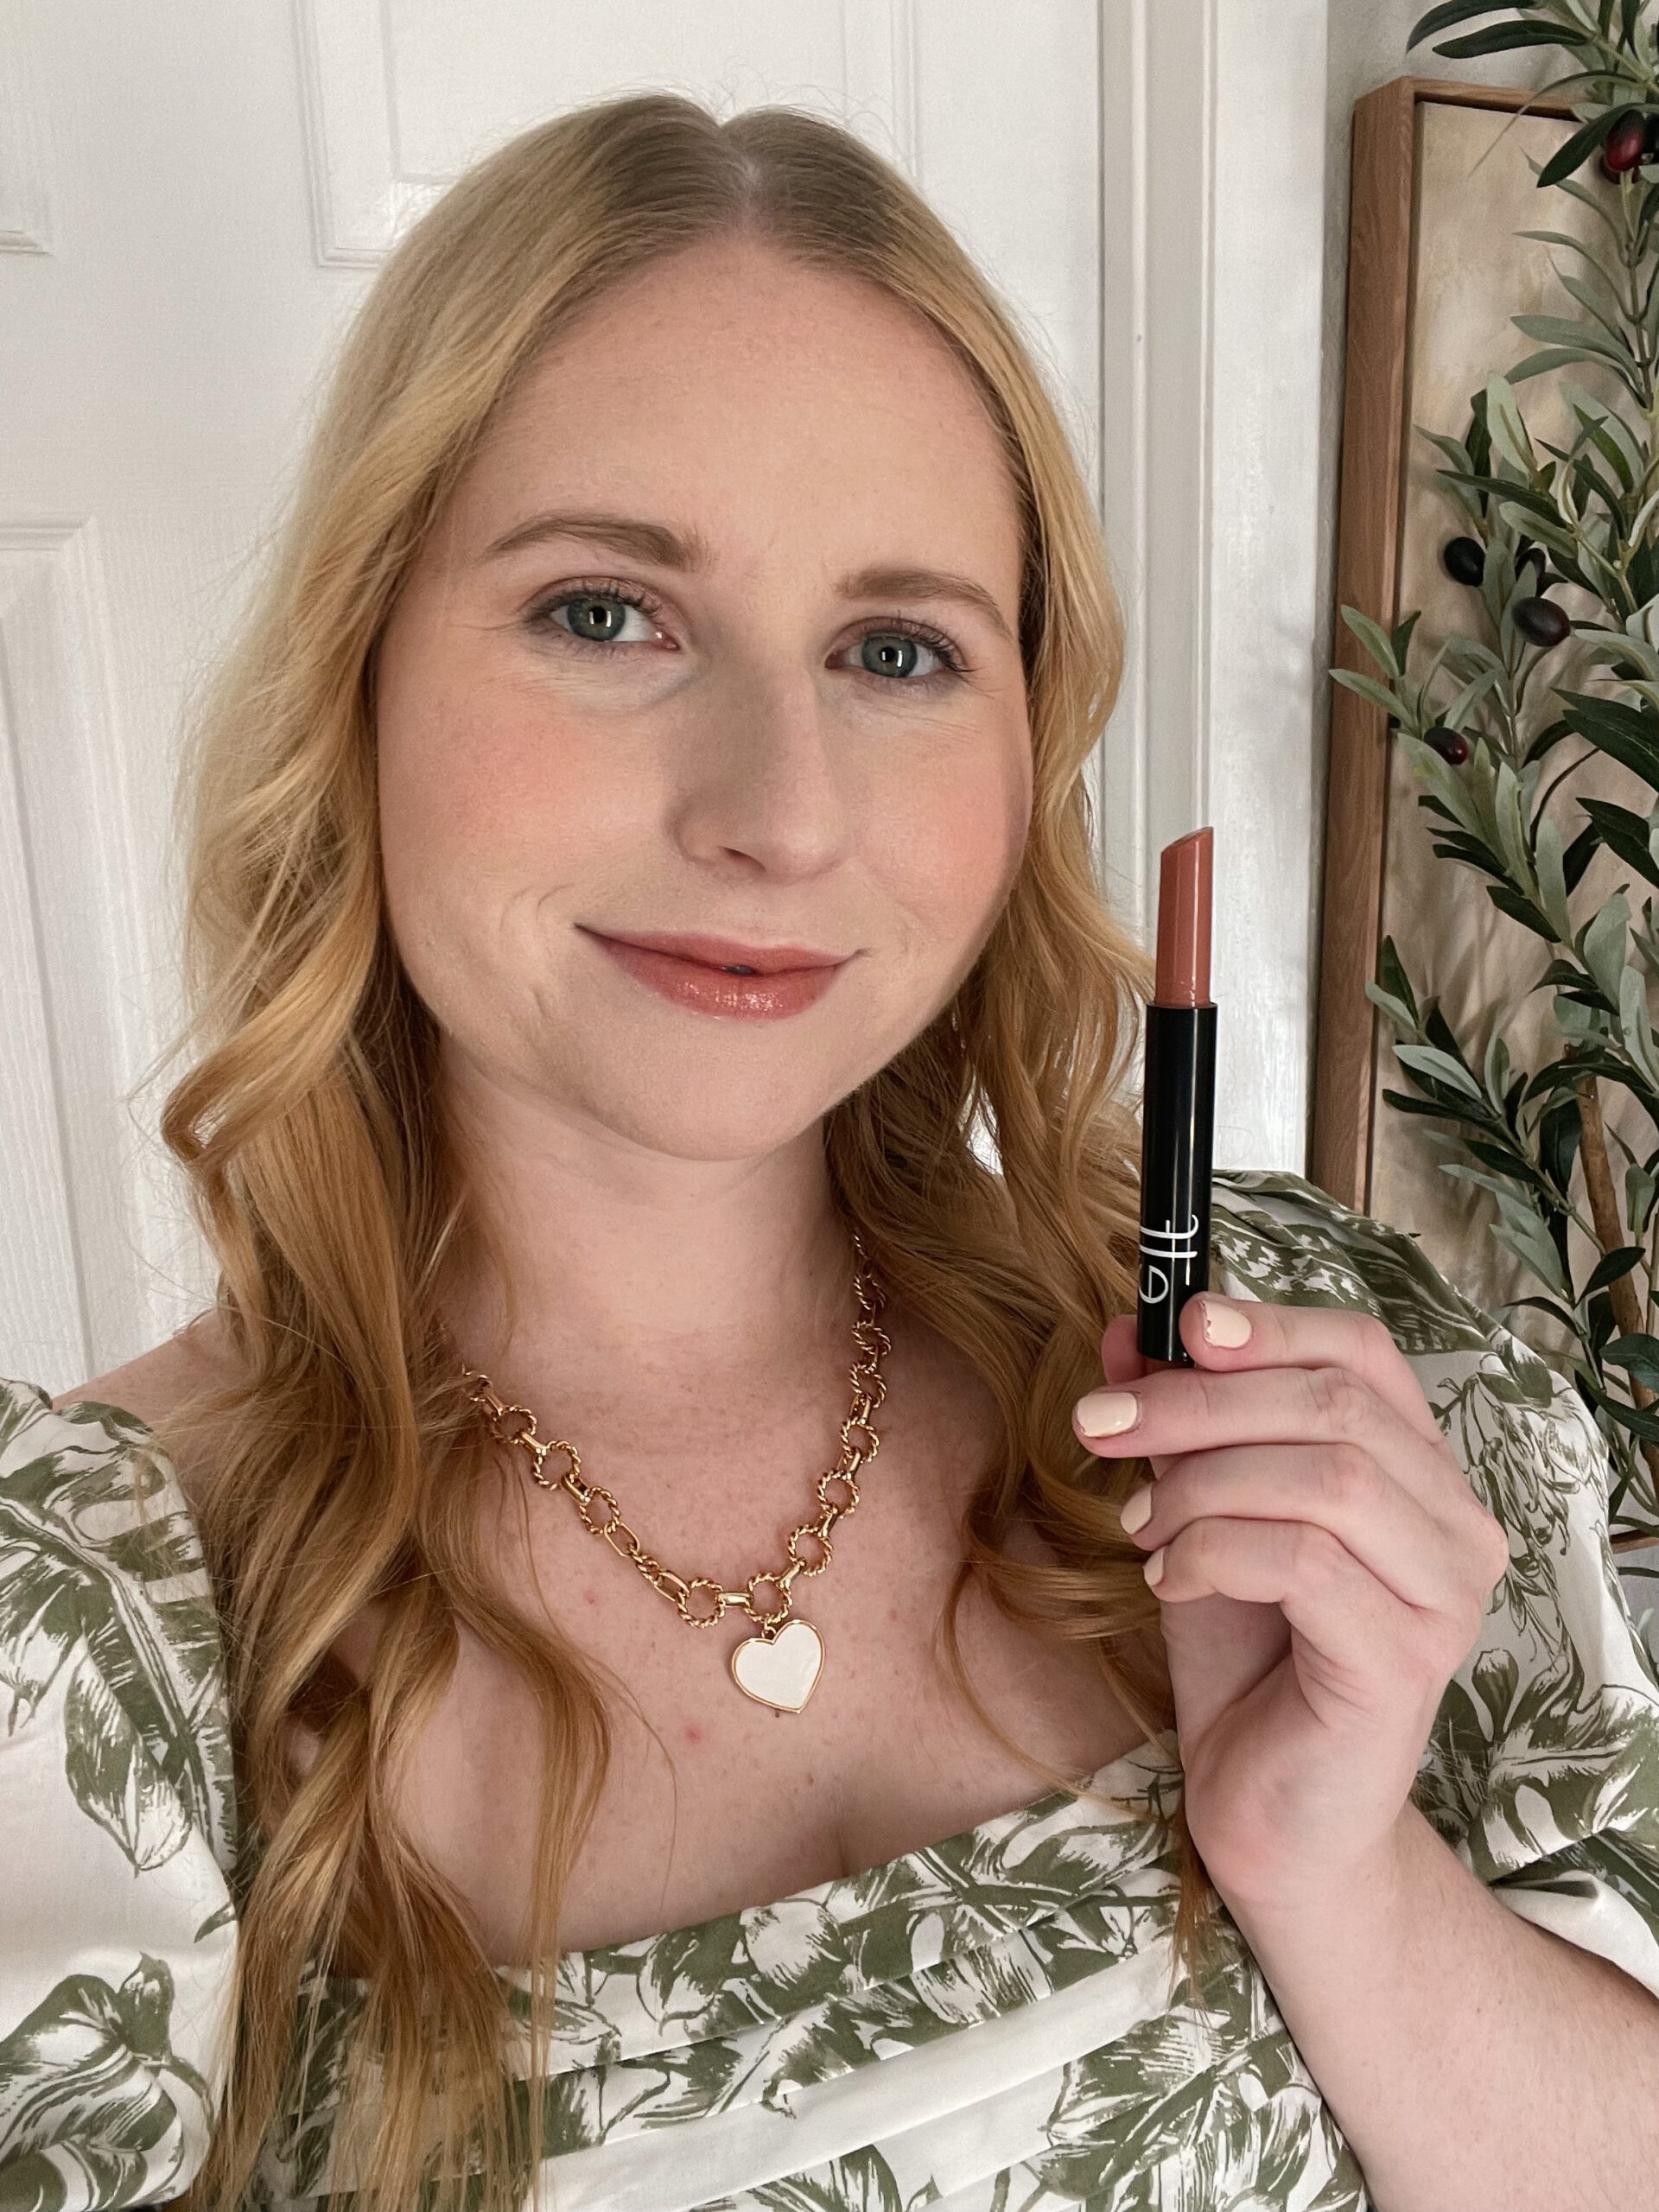 e.l.f. cosmetics Pout Clout Lip Plumping Pen Review - Affordable by Amanda